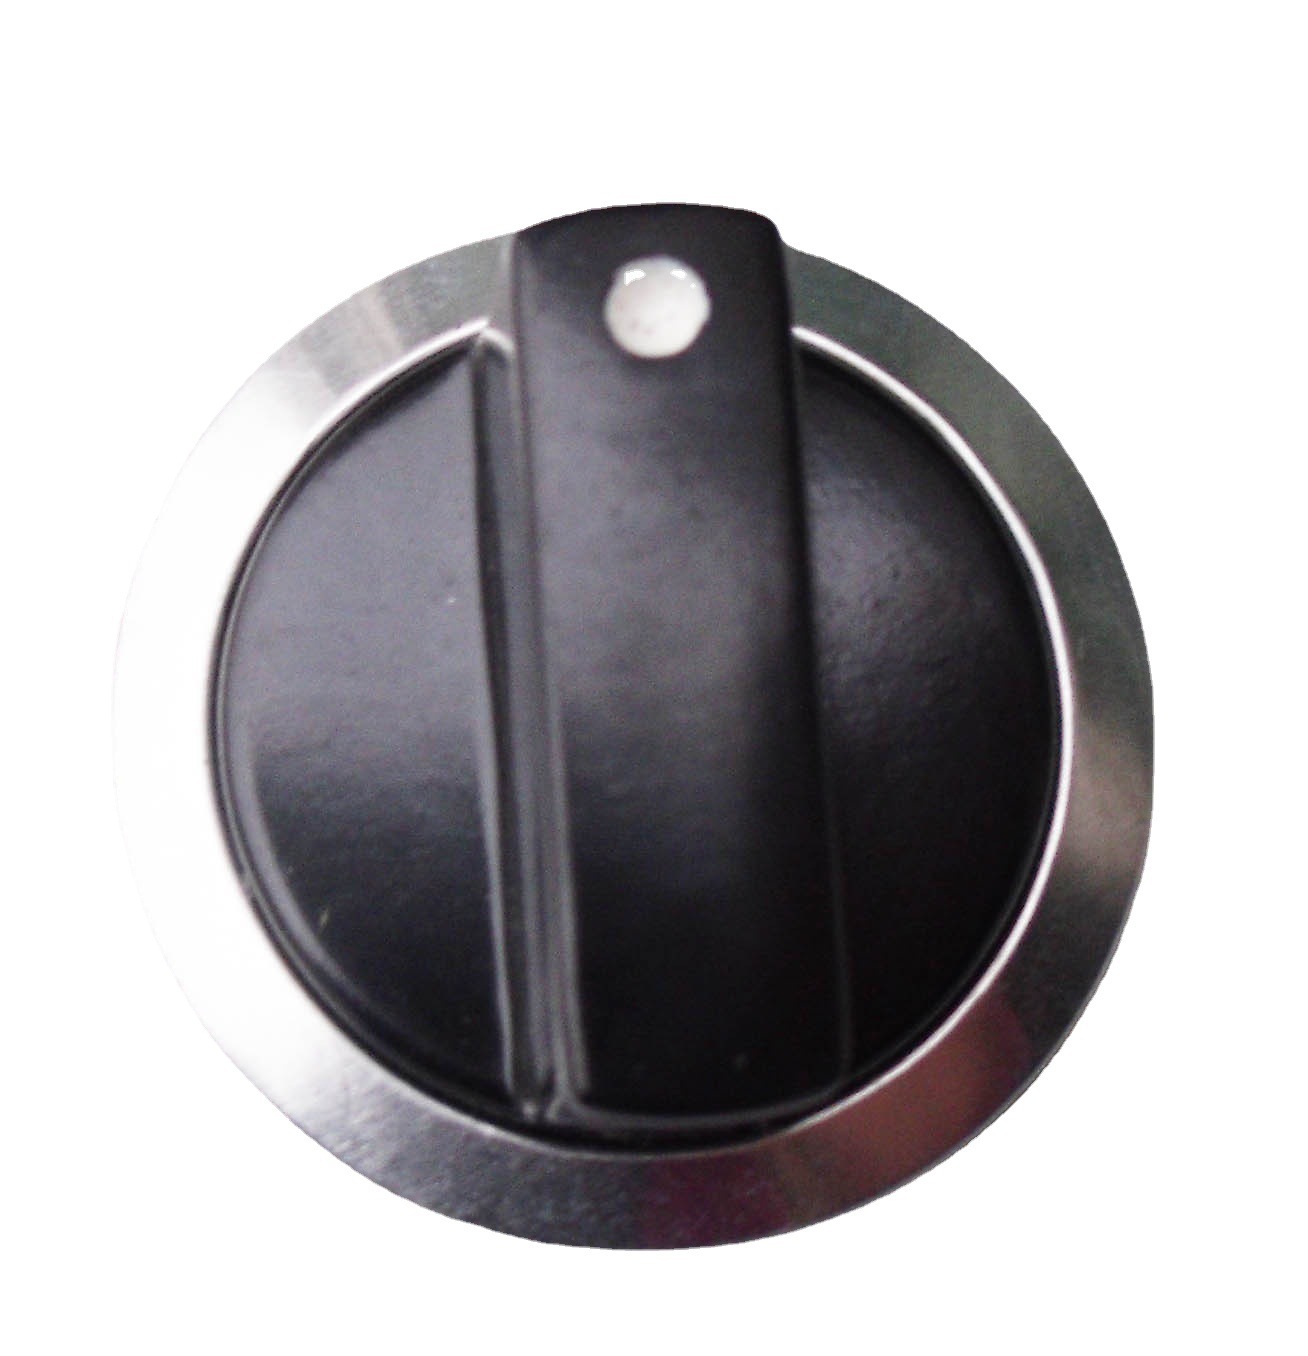 Desktop Gas Stove Switch Liquefied Petroleum Gas Stove Knob Stove Accessories Gas Stove Switch Knob Ignition Switch Knob